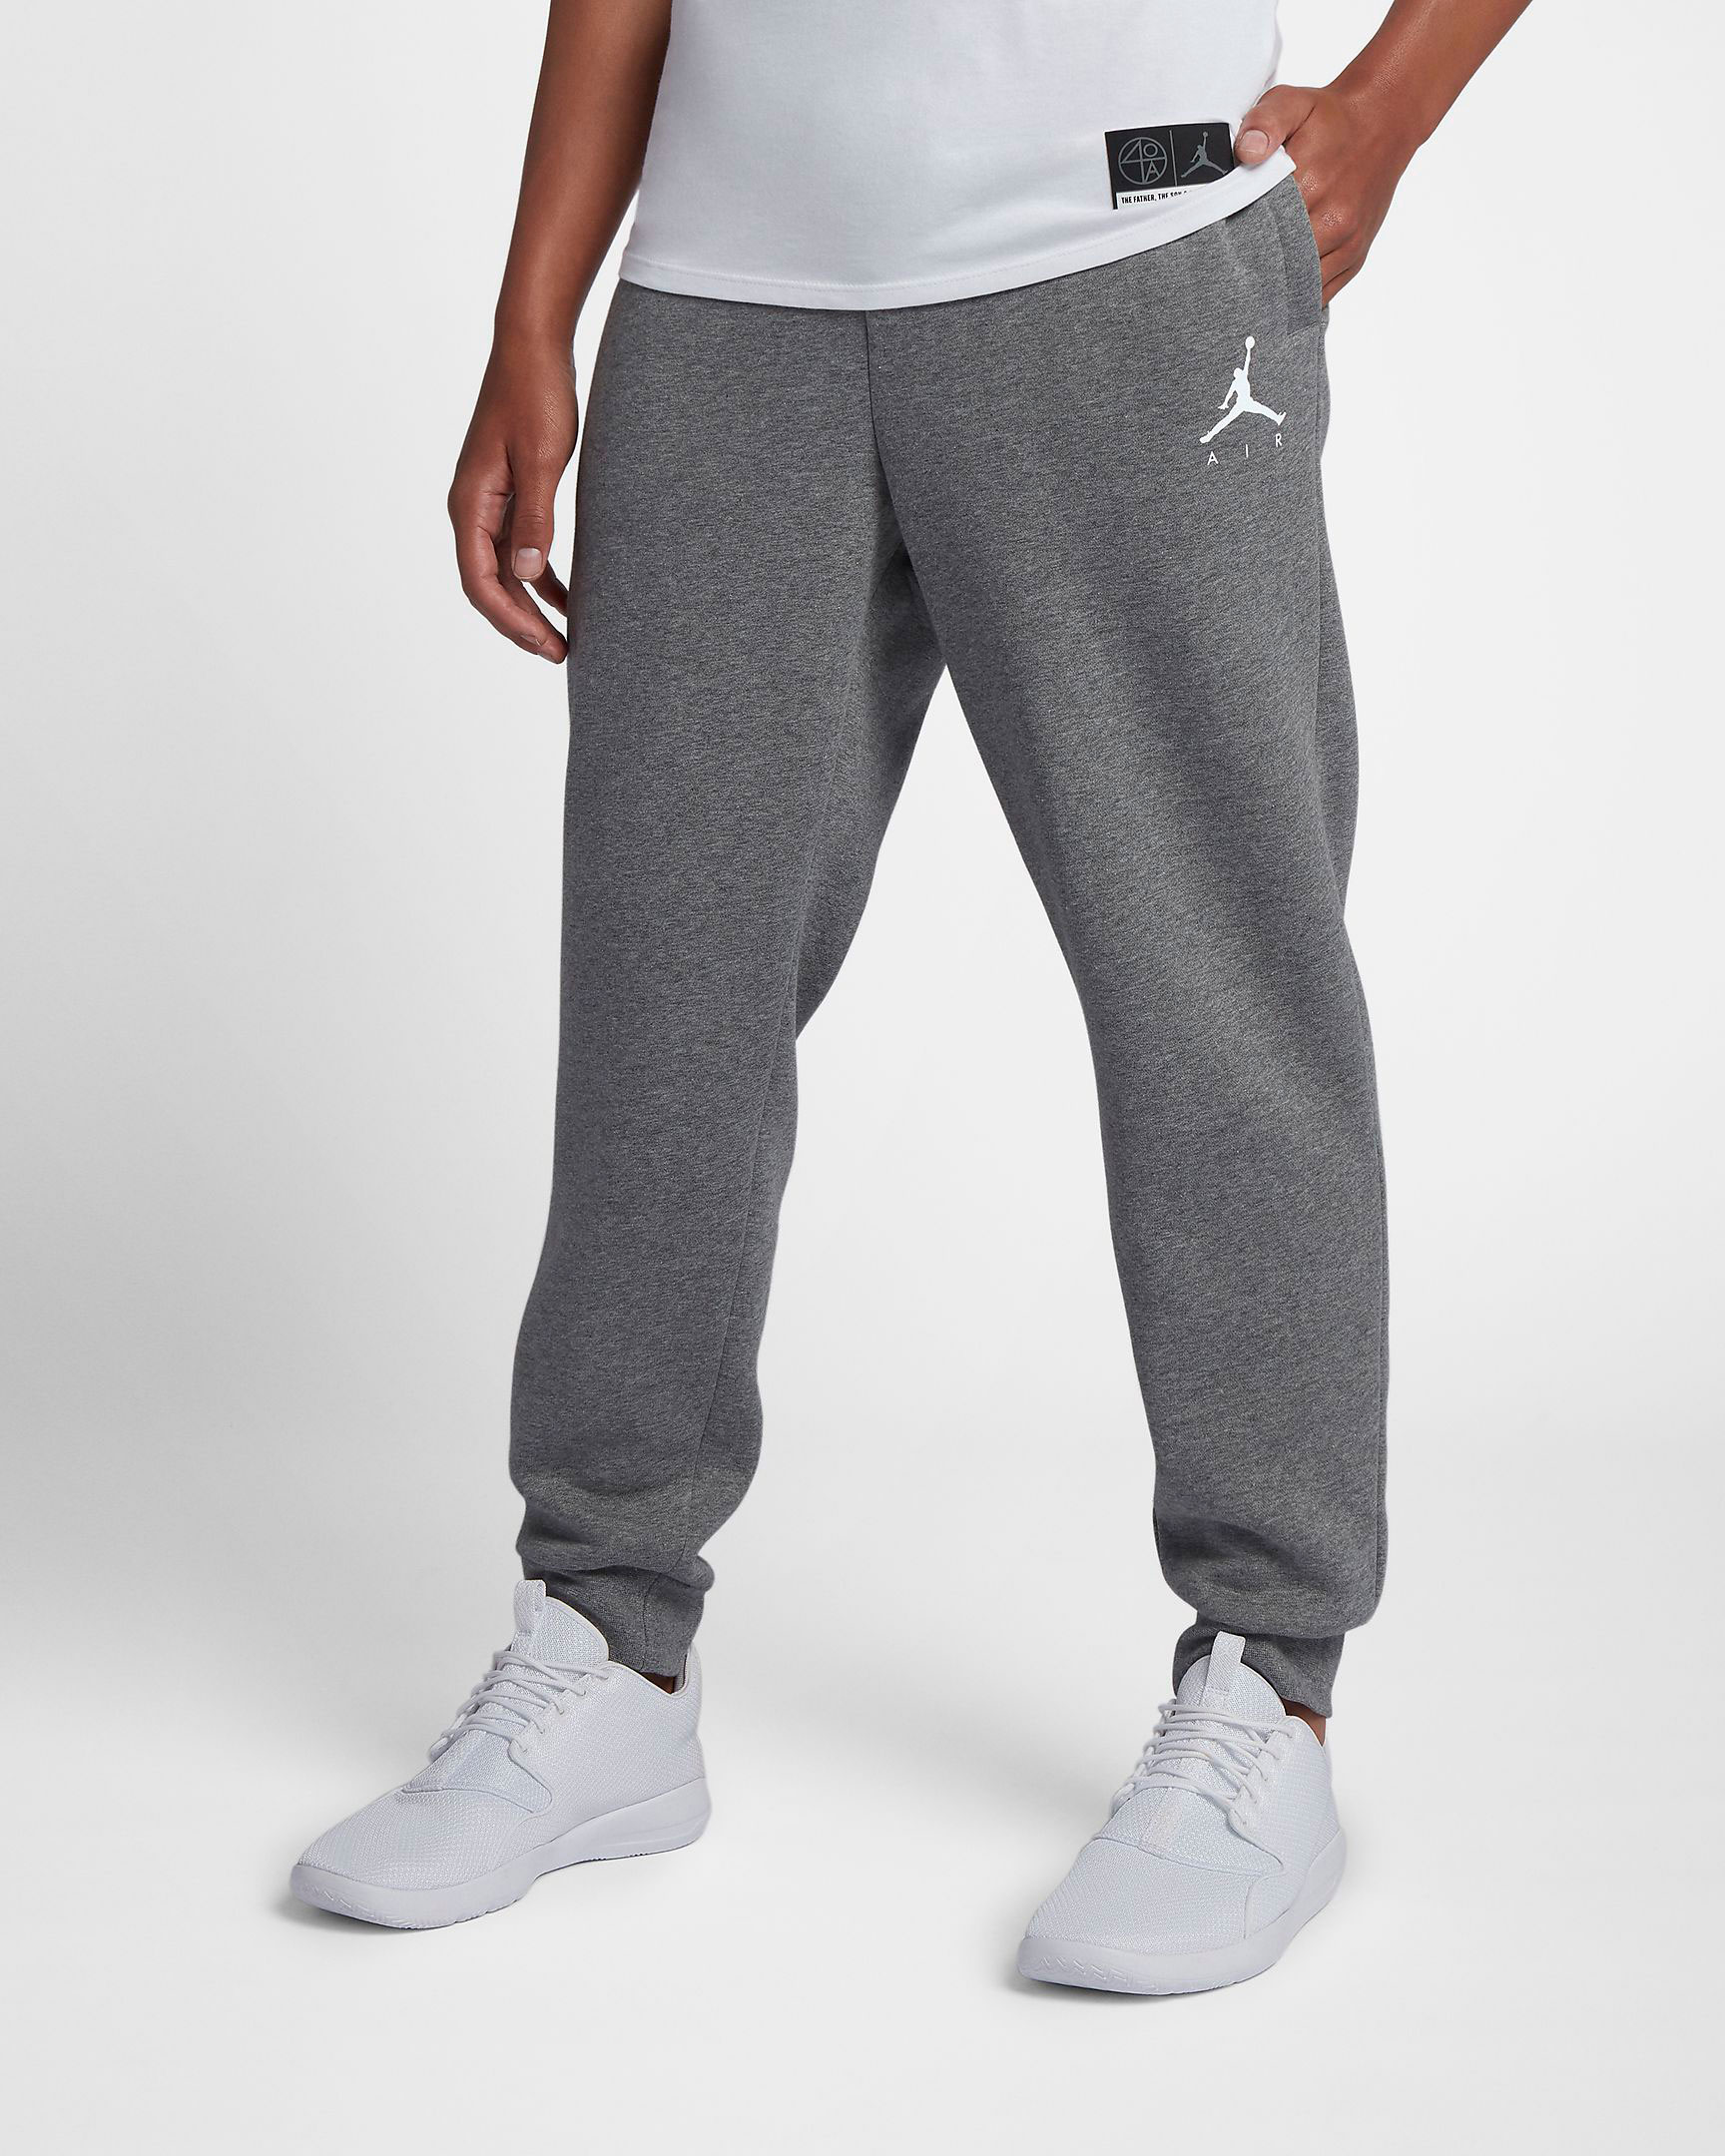 air-jordan-12-dark-grey-white-pants-match